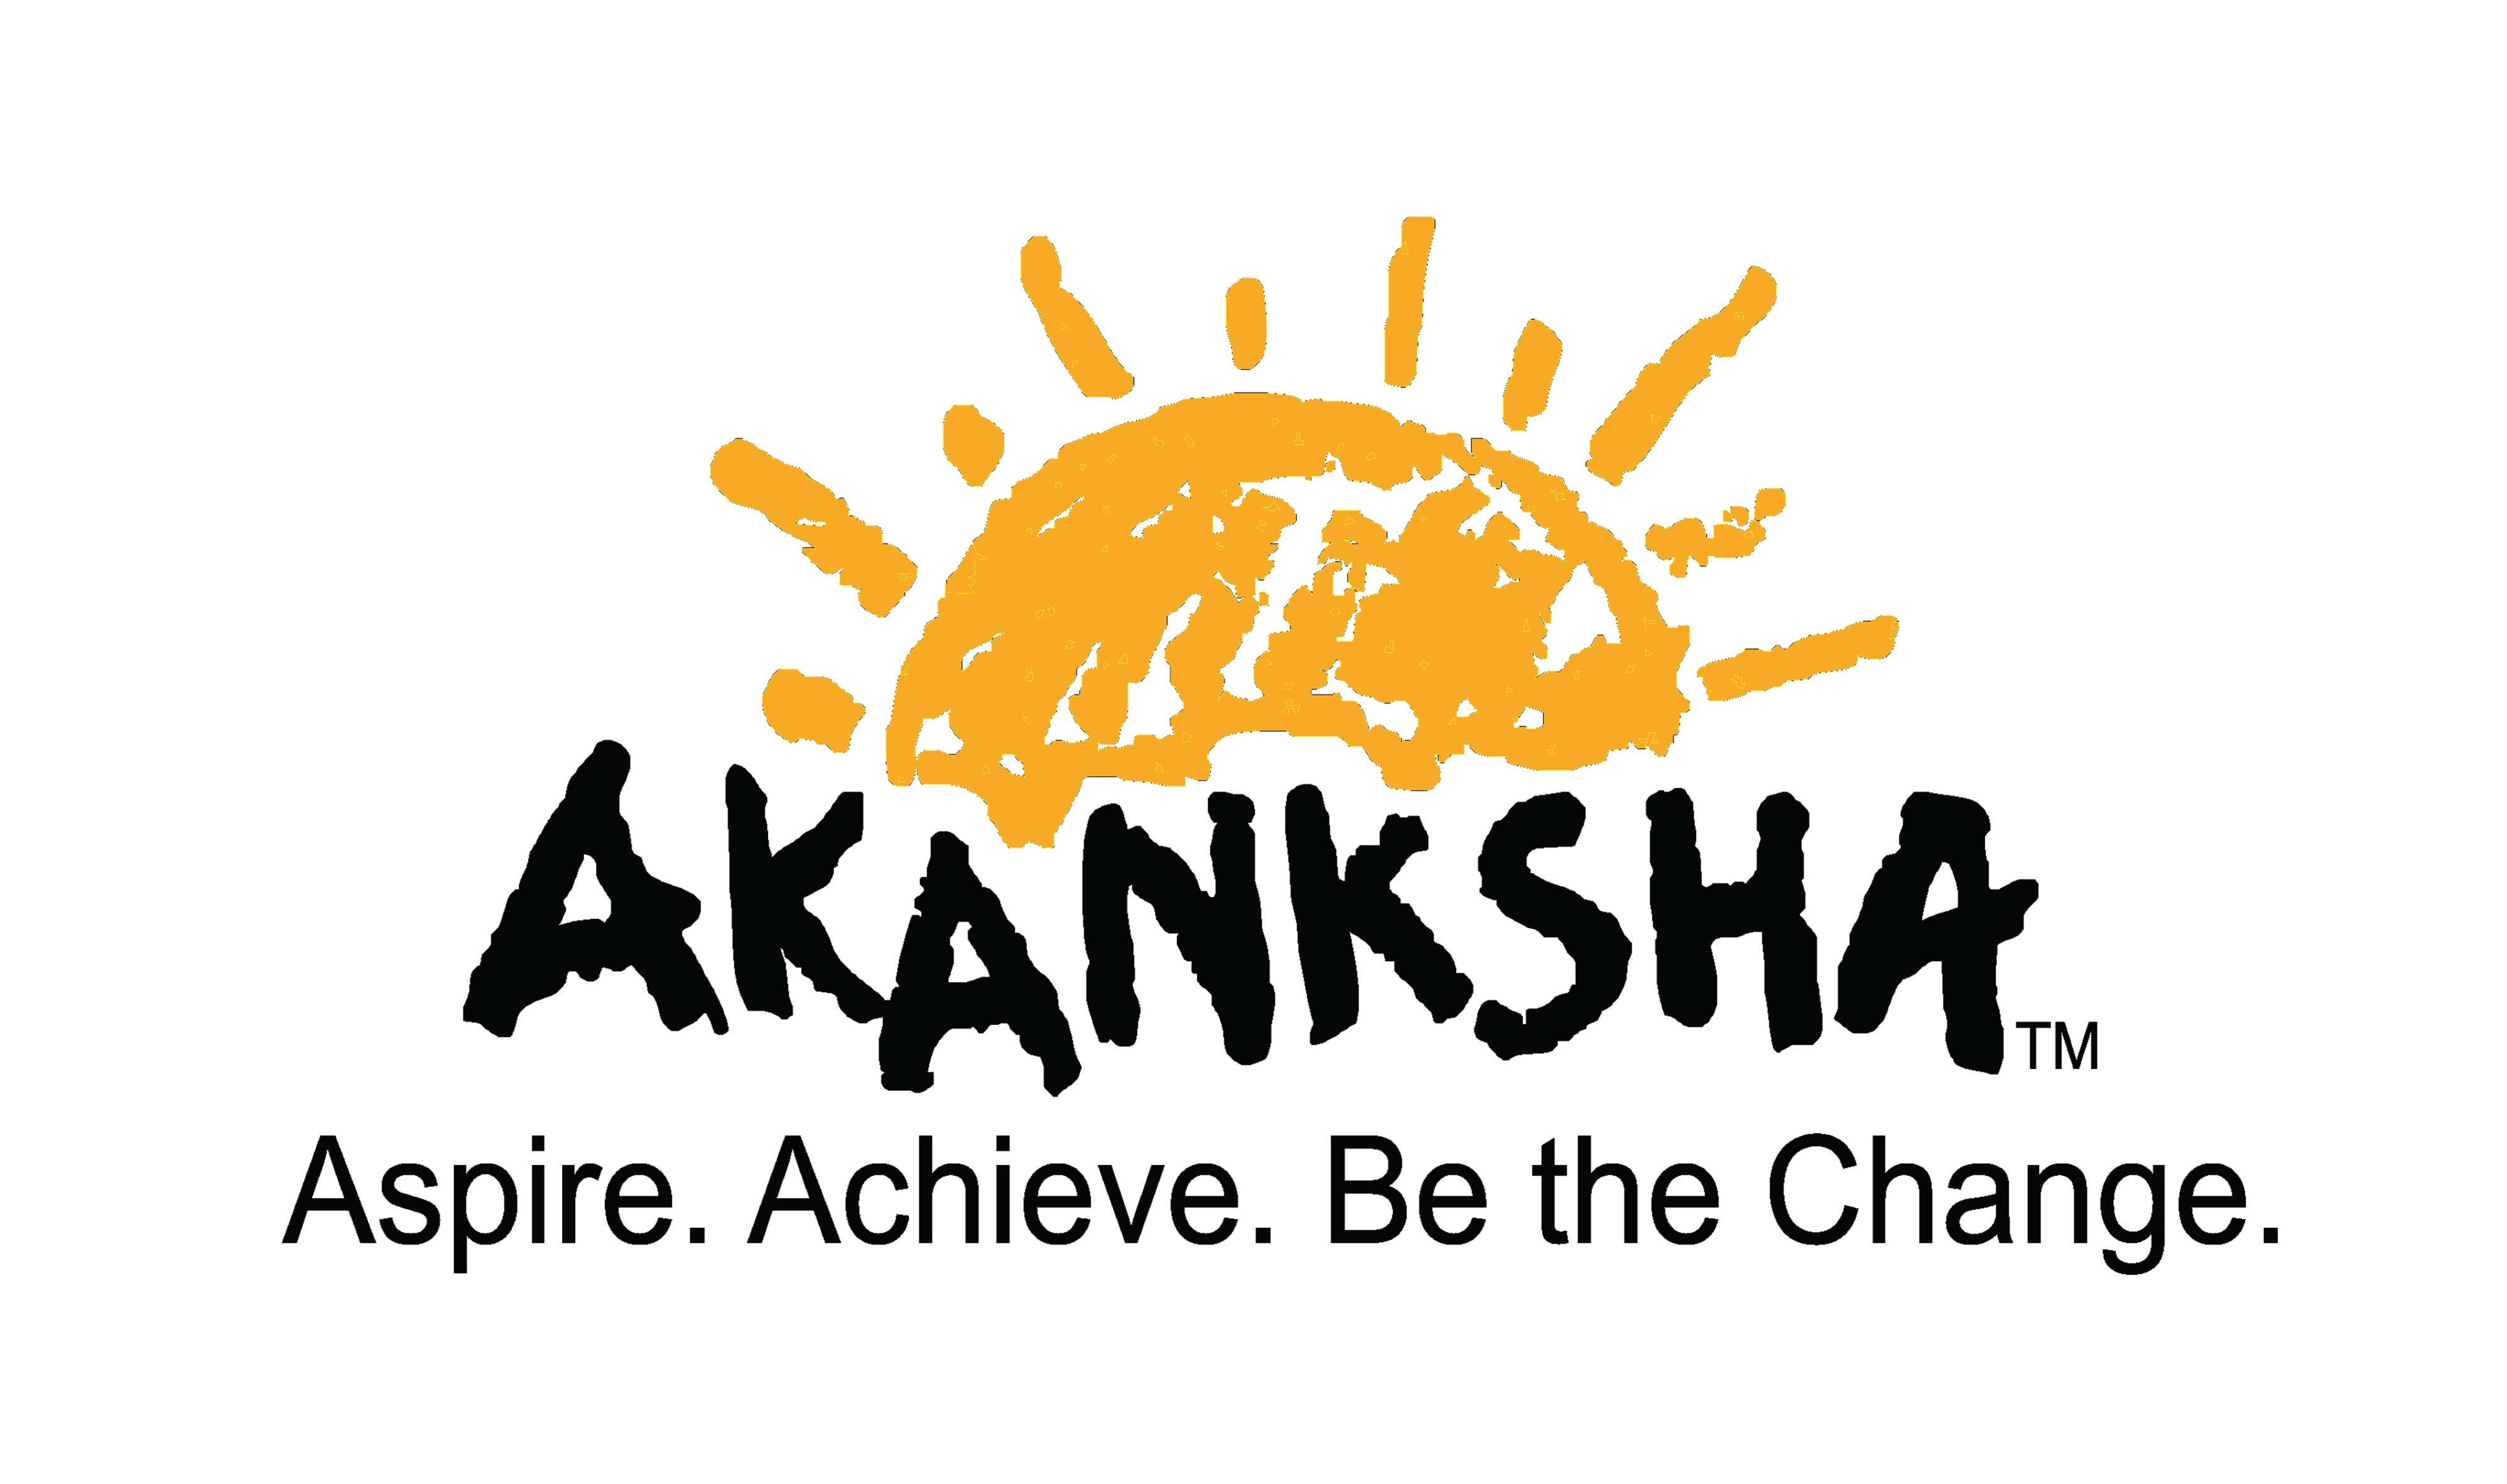 Lodha Genius Program is partnered with Akansha Foundation